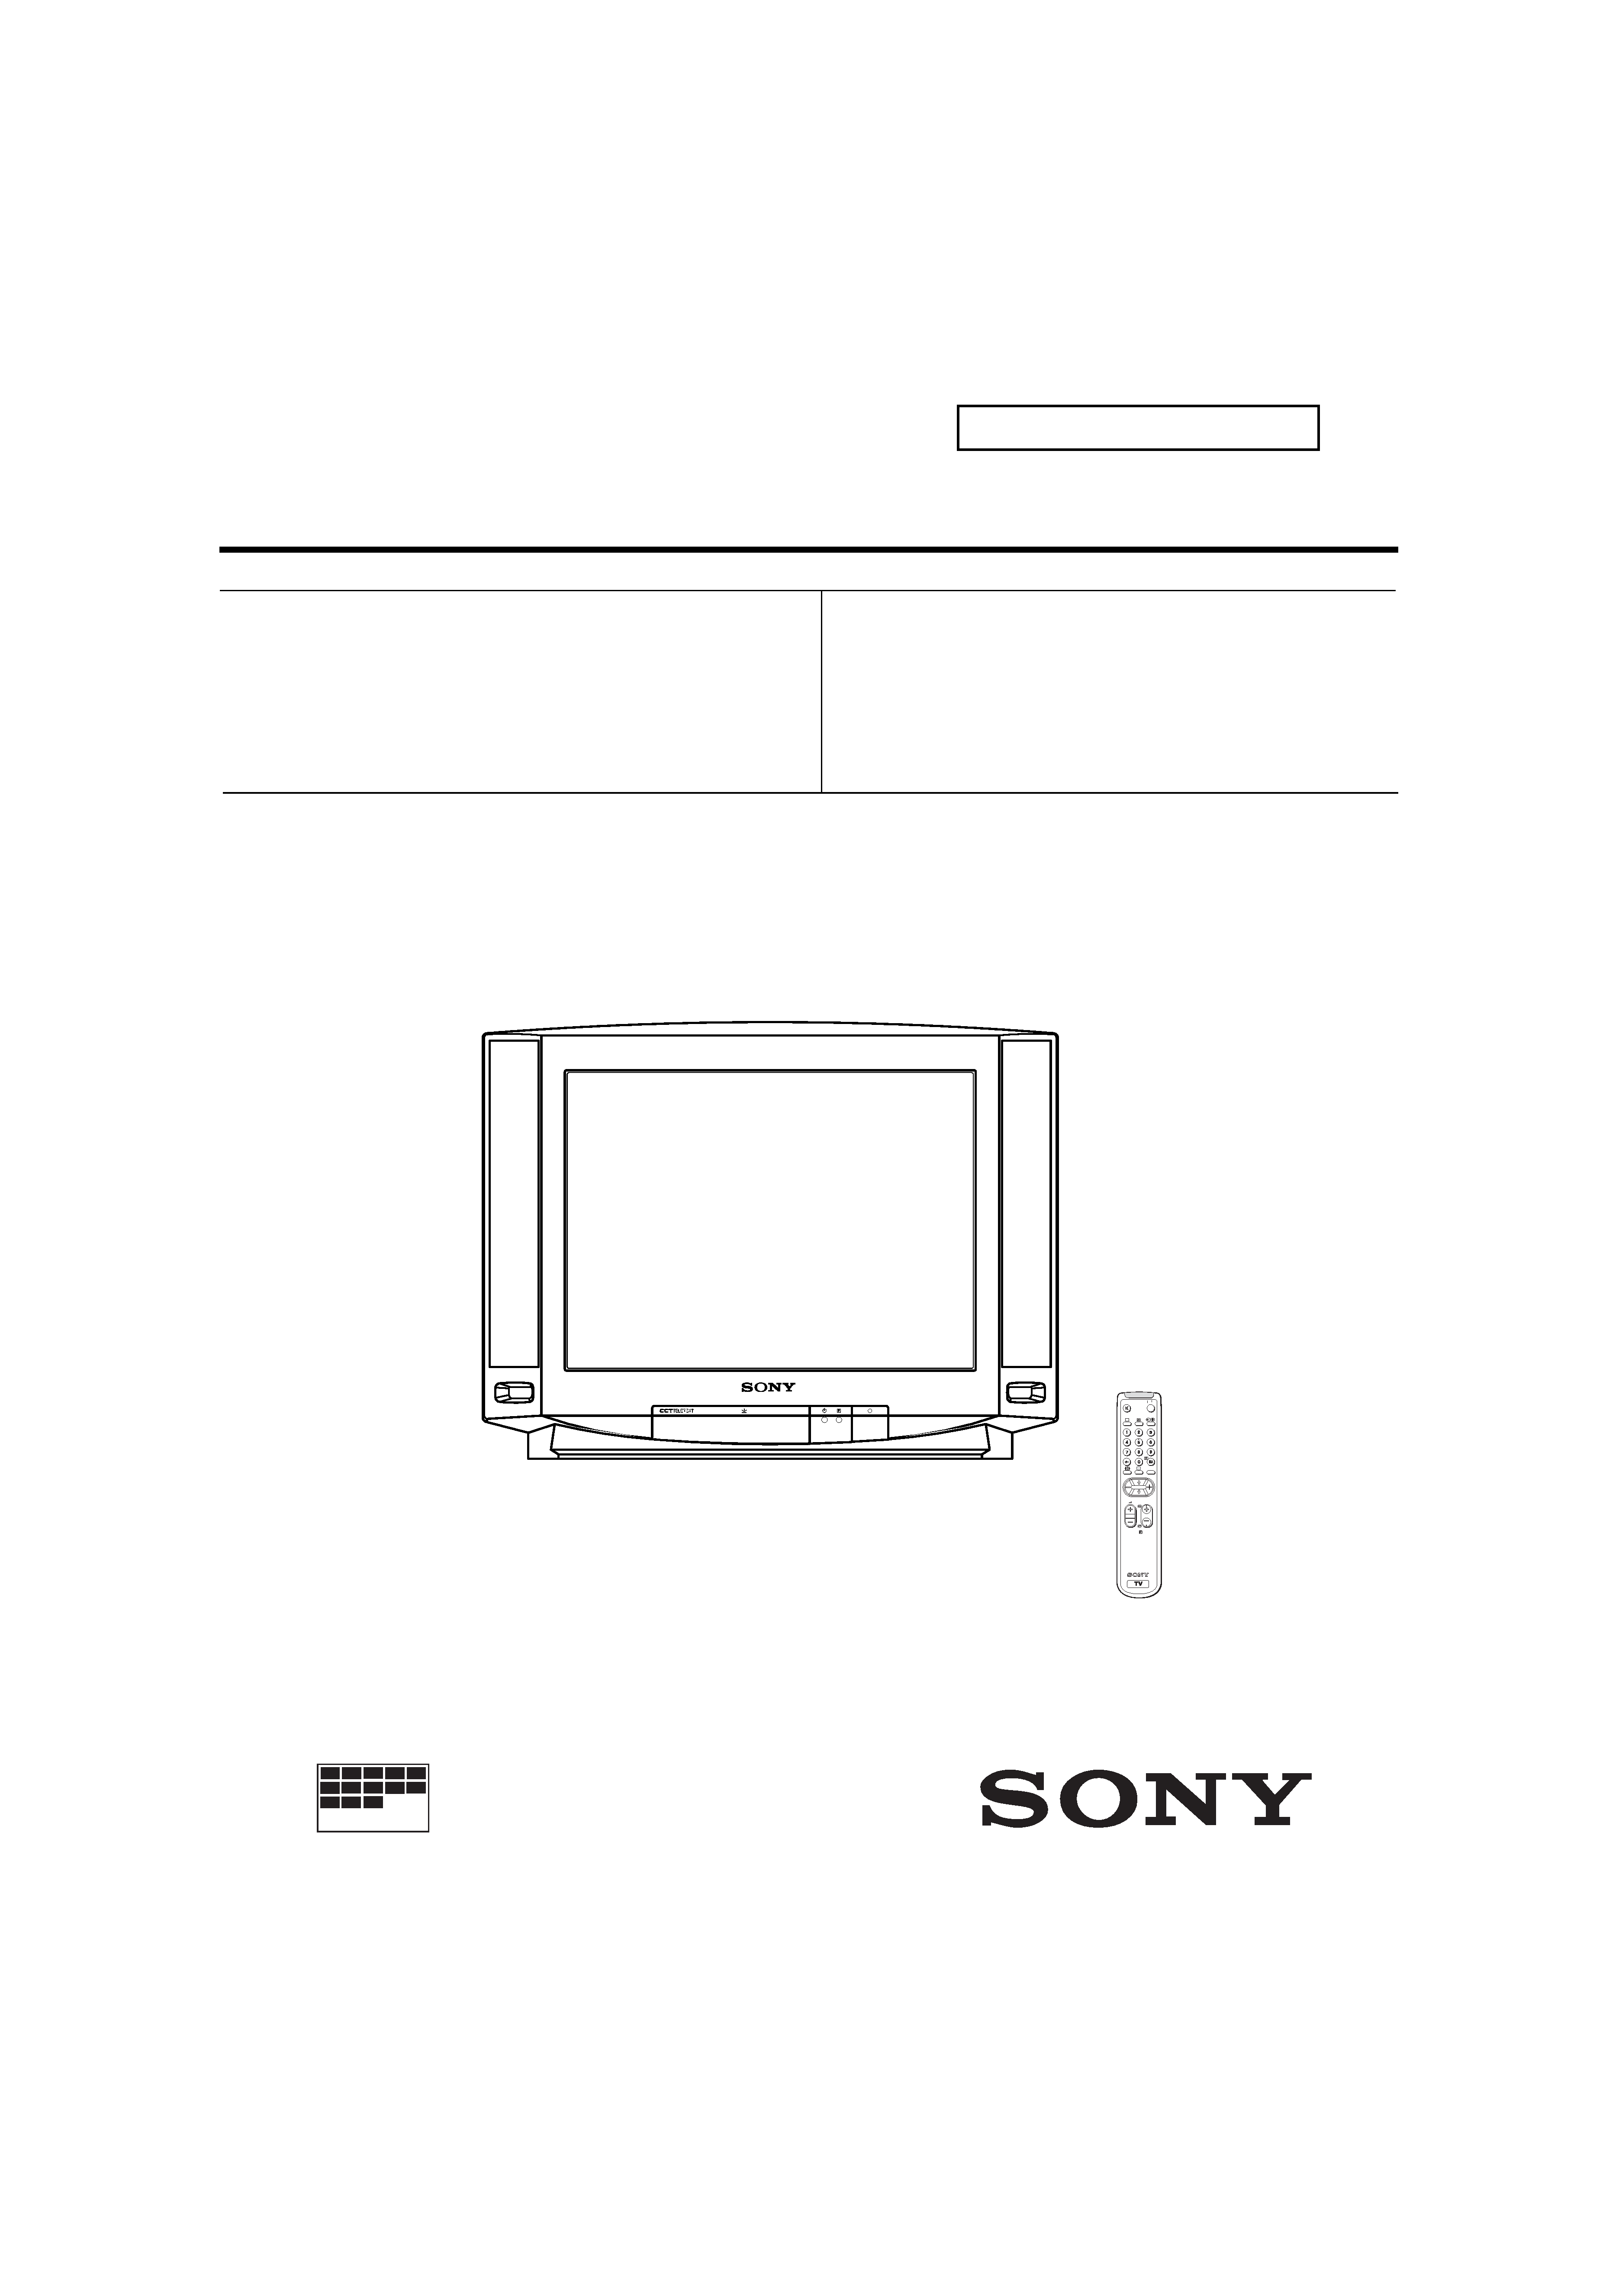 Sony kv 29x1r схема